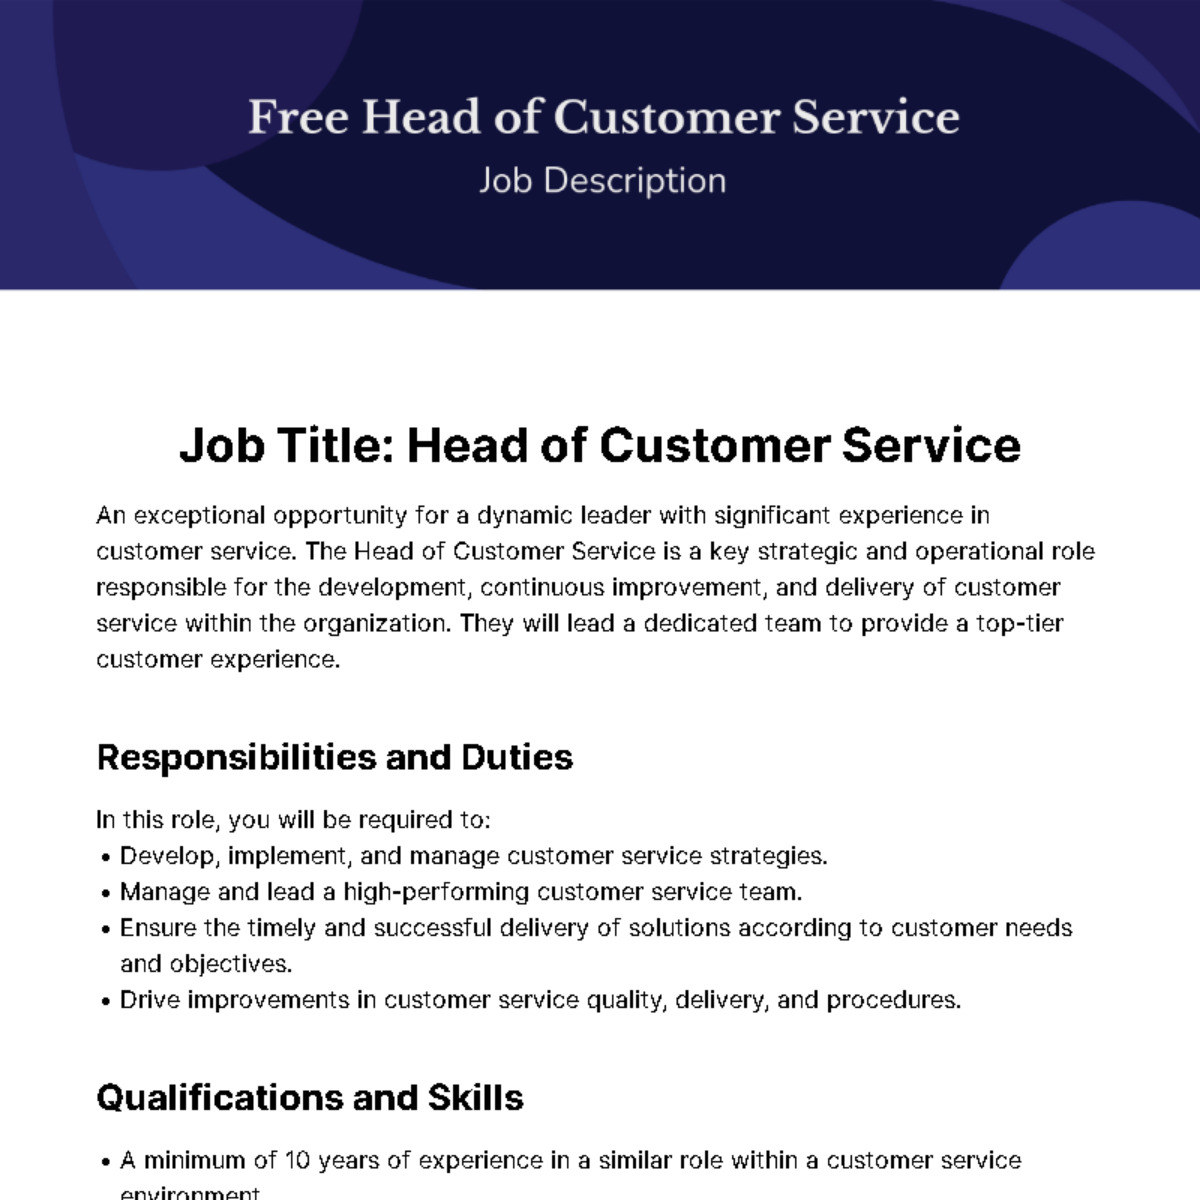 Free Head of Customer Service Job Description Template